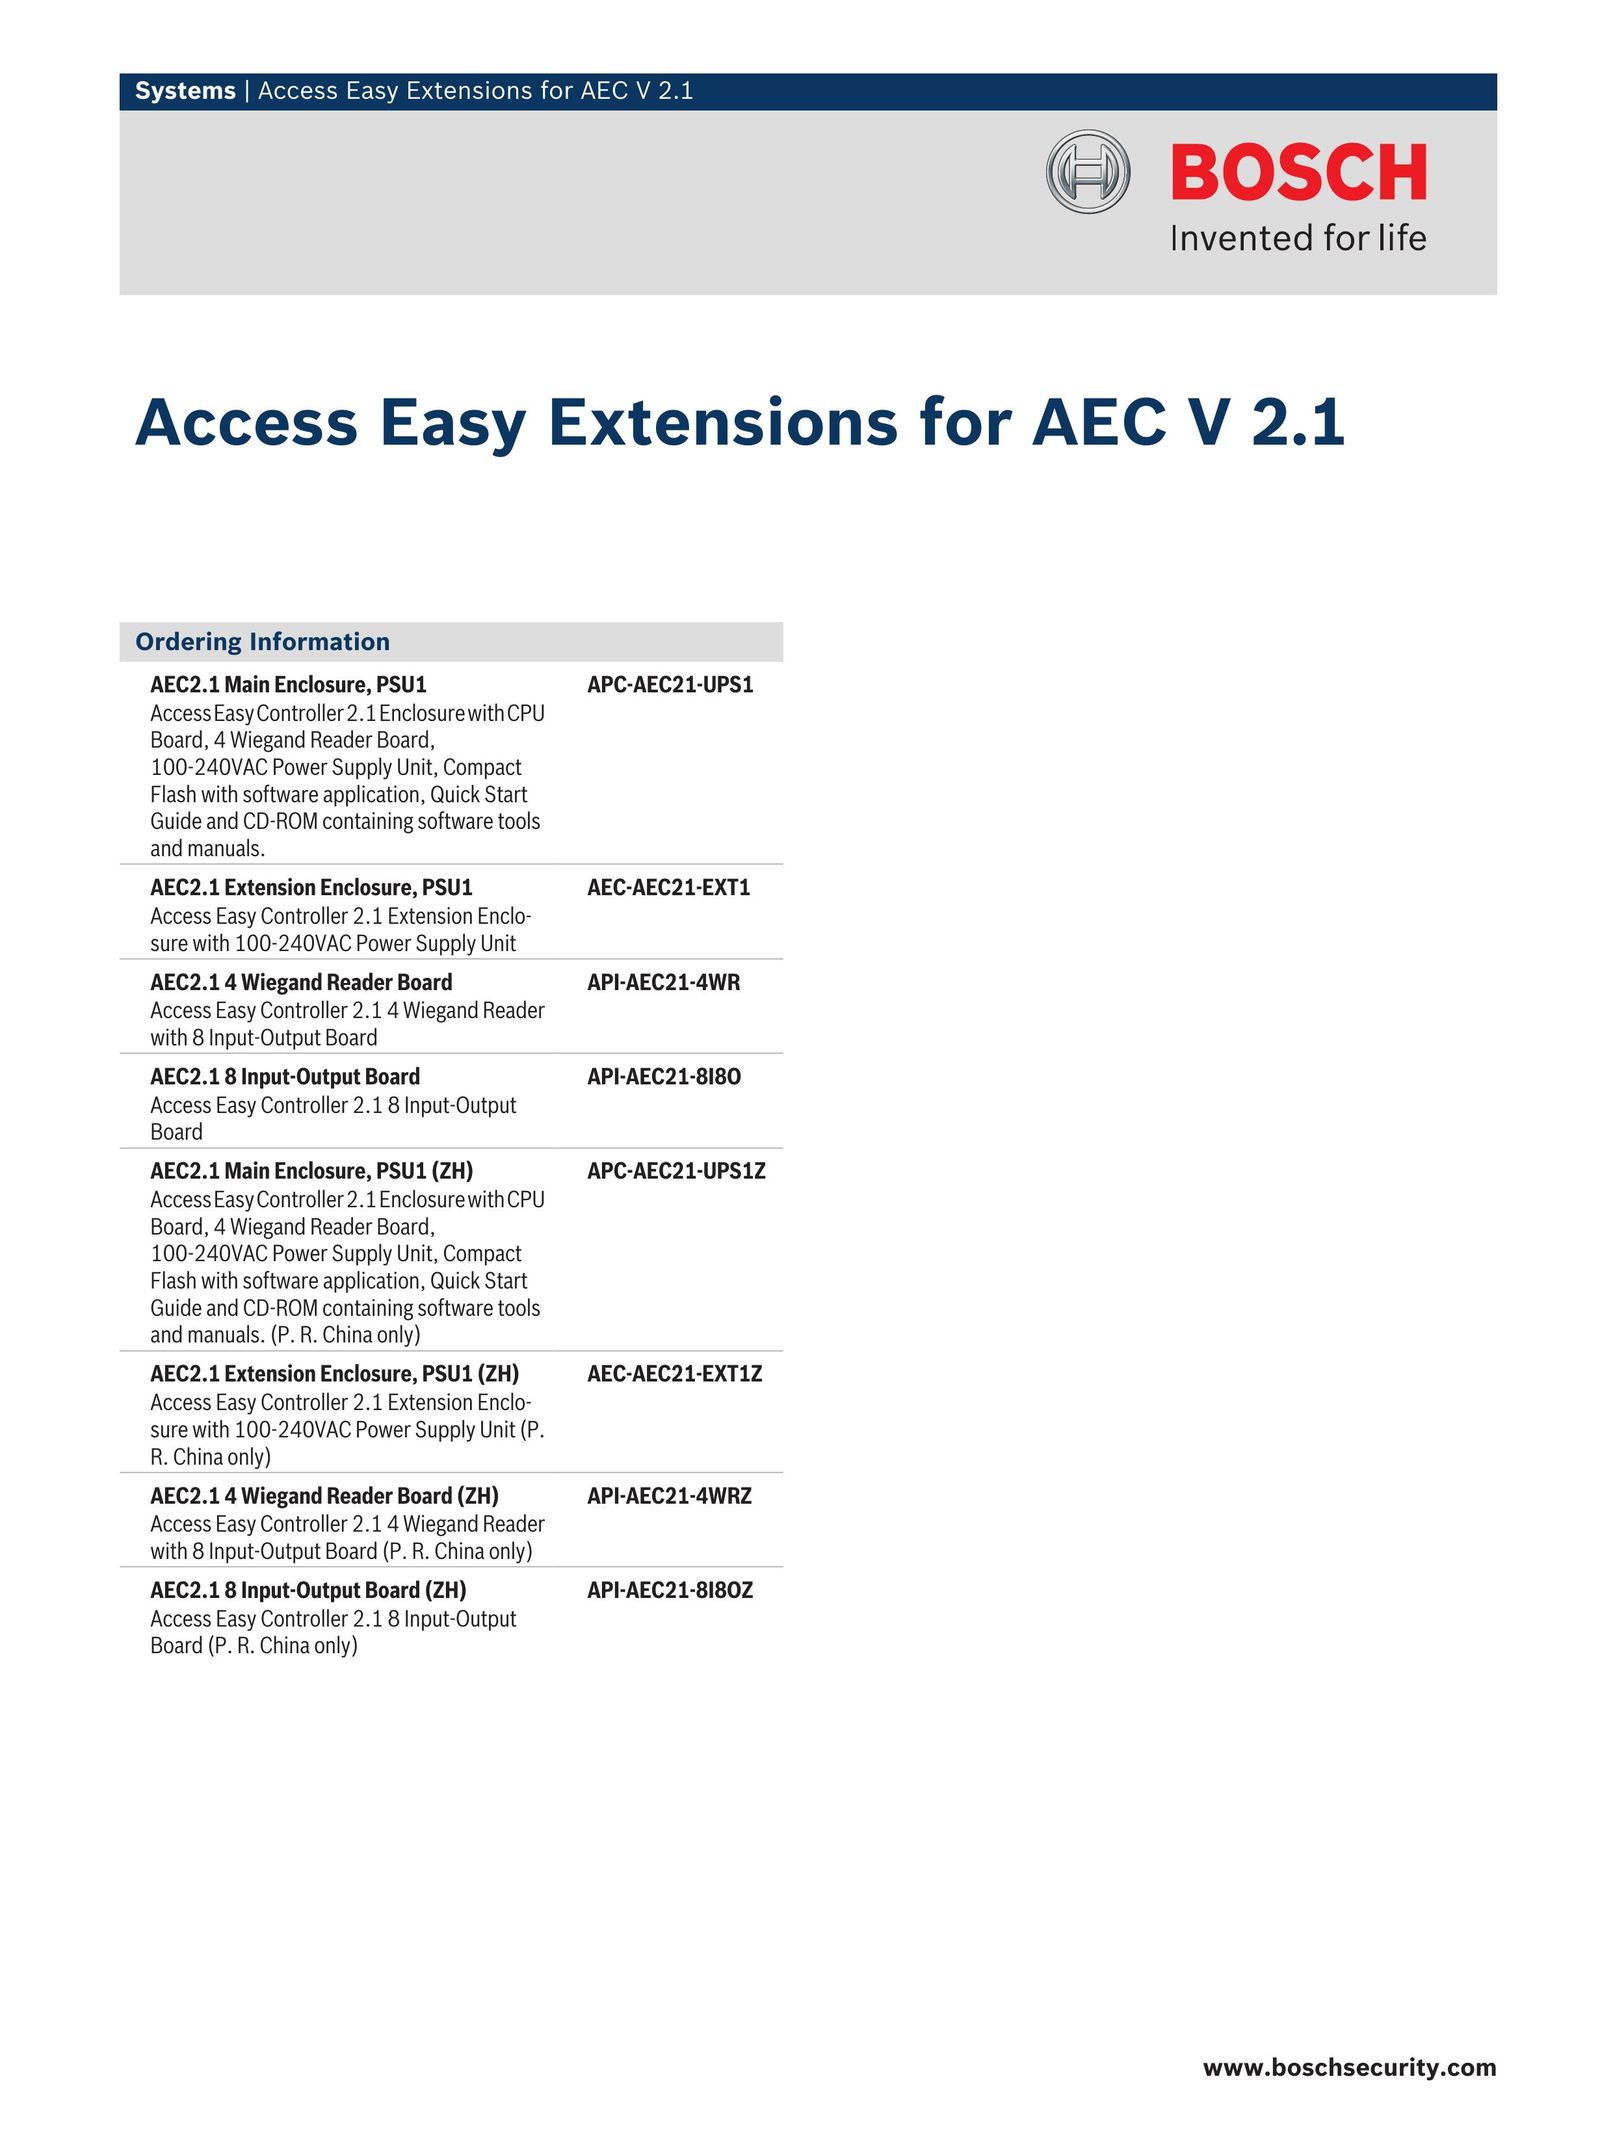 Bosch Appliances APC-AEC21-UPS1Z Home Security System User Manual